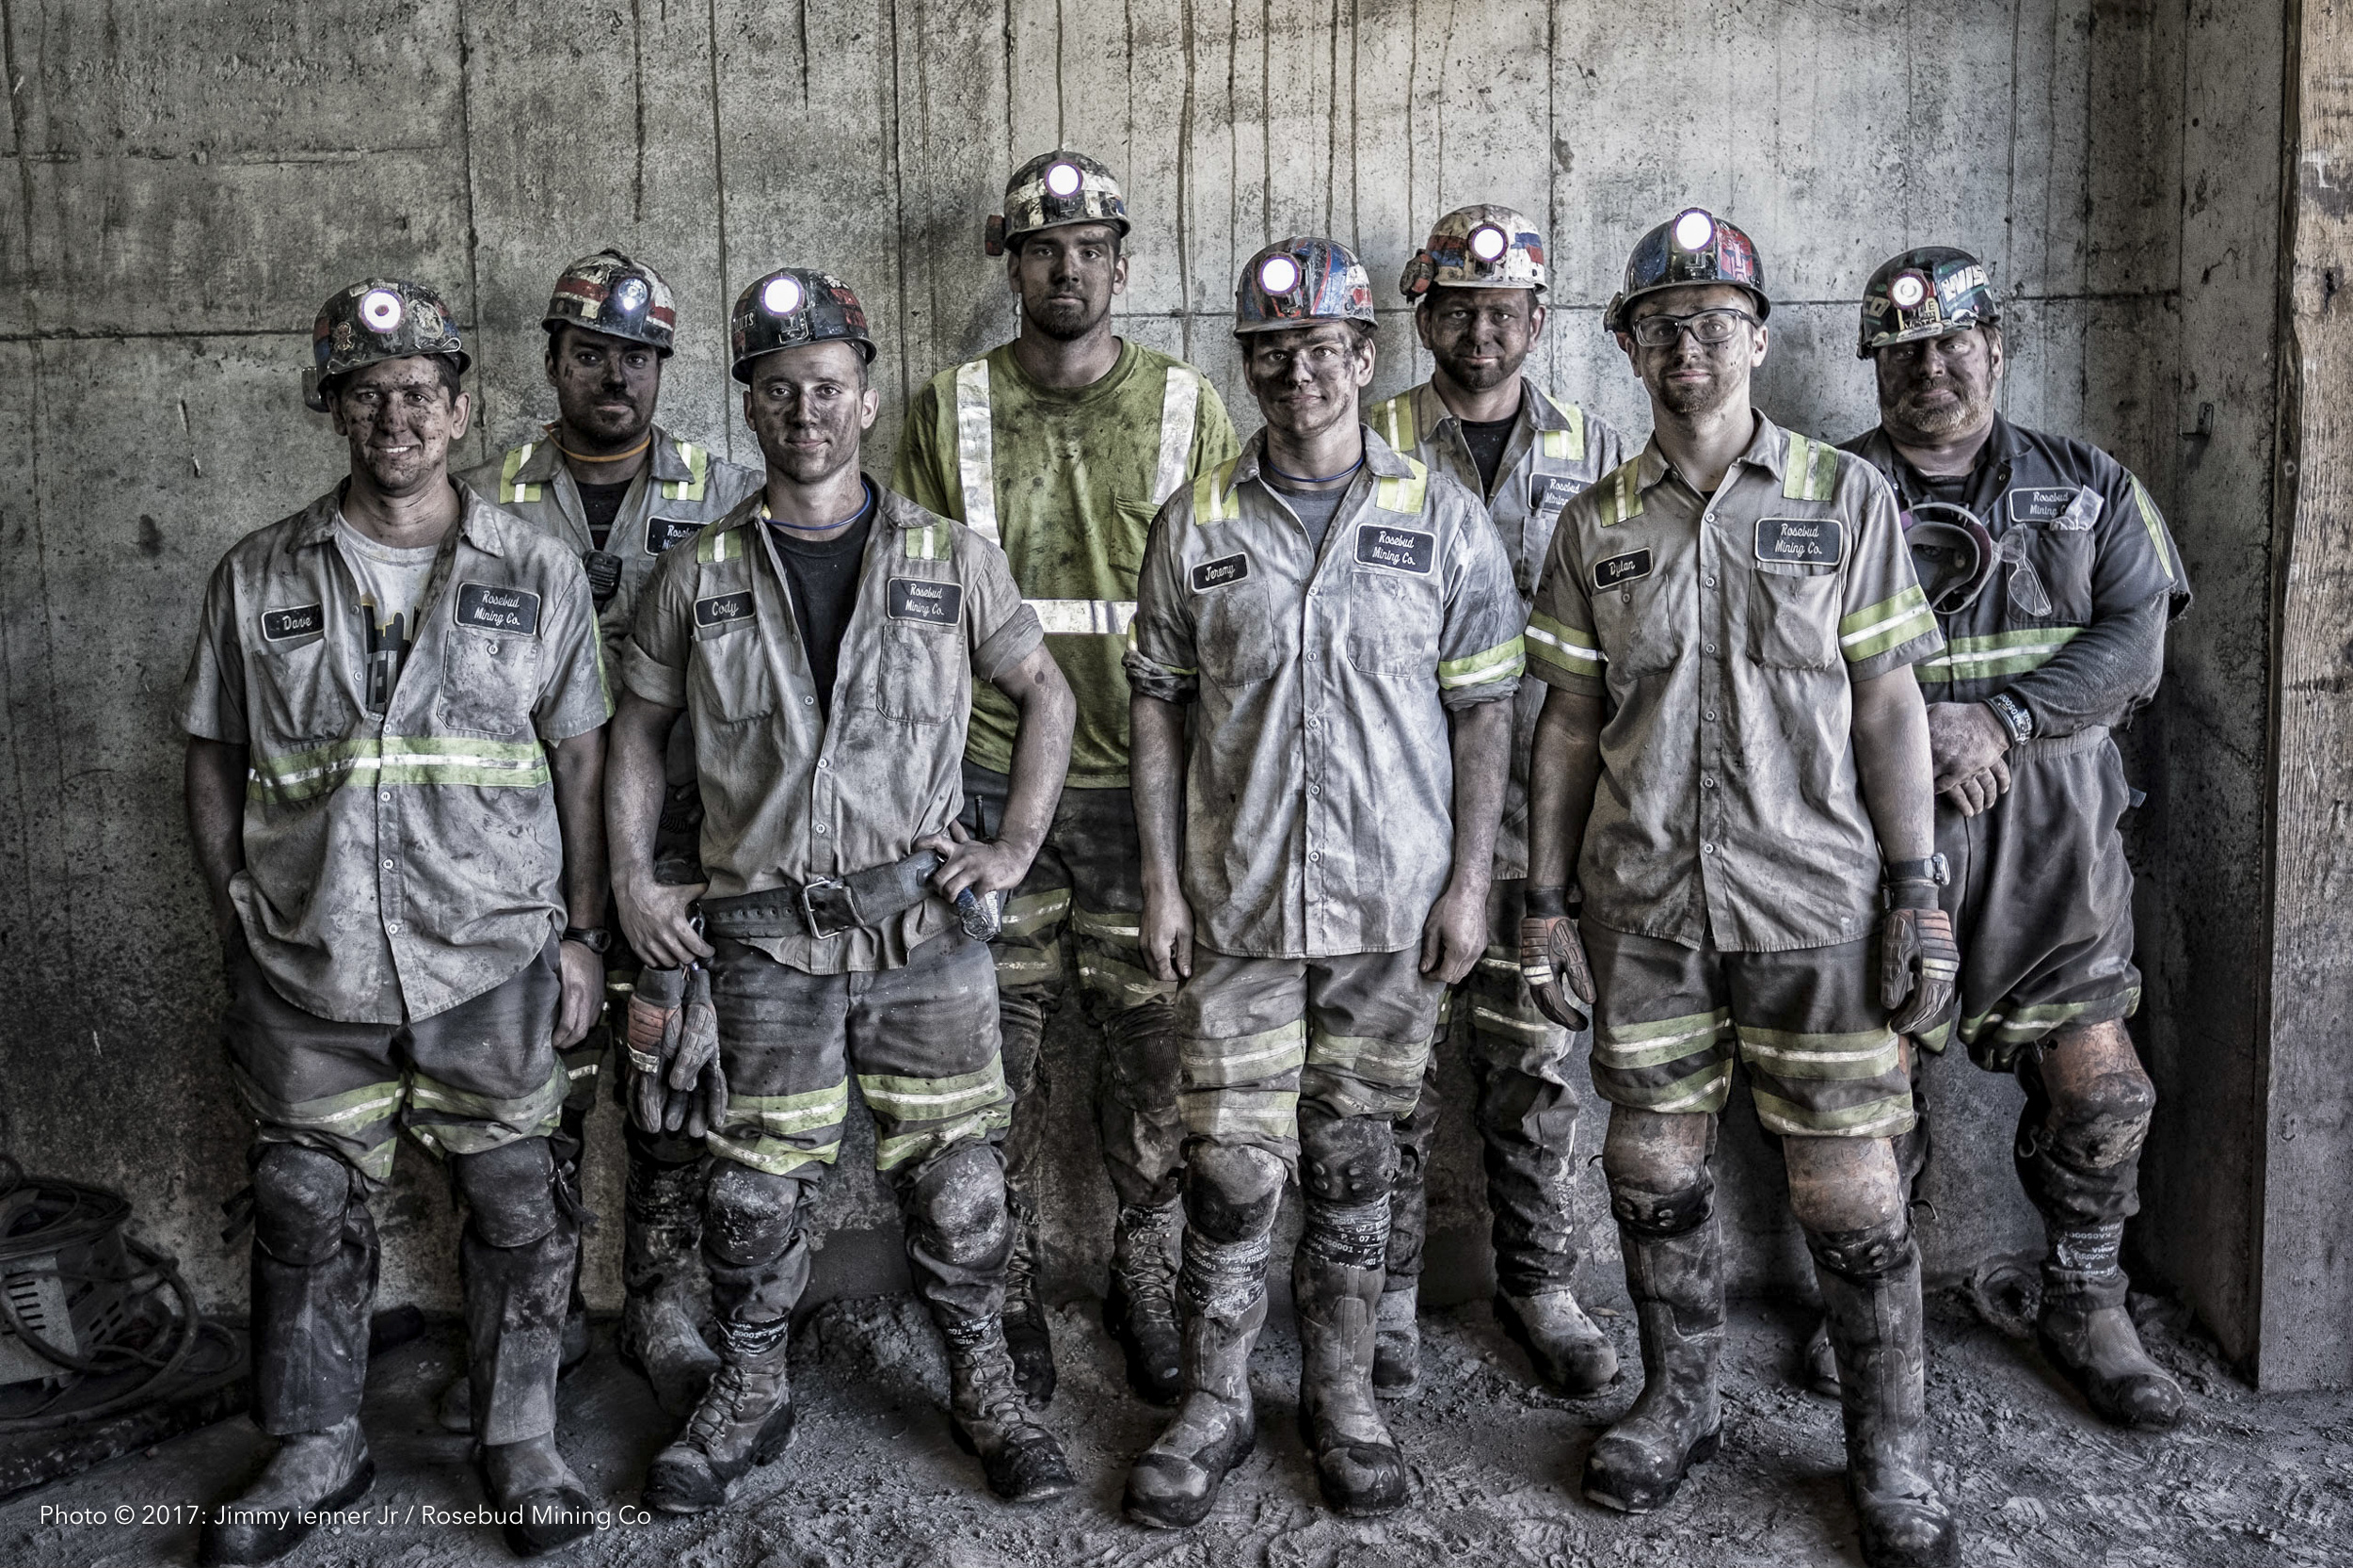 Coal Mining, Rosebud Mining Company